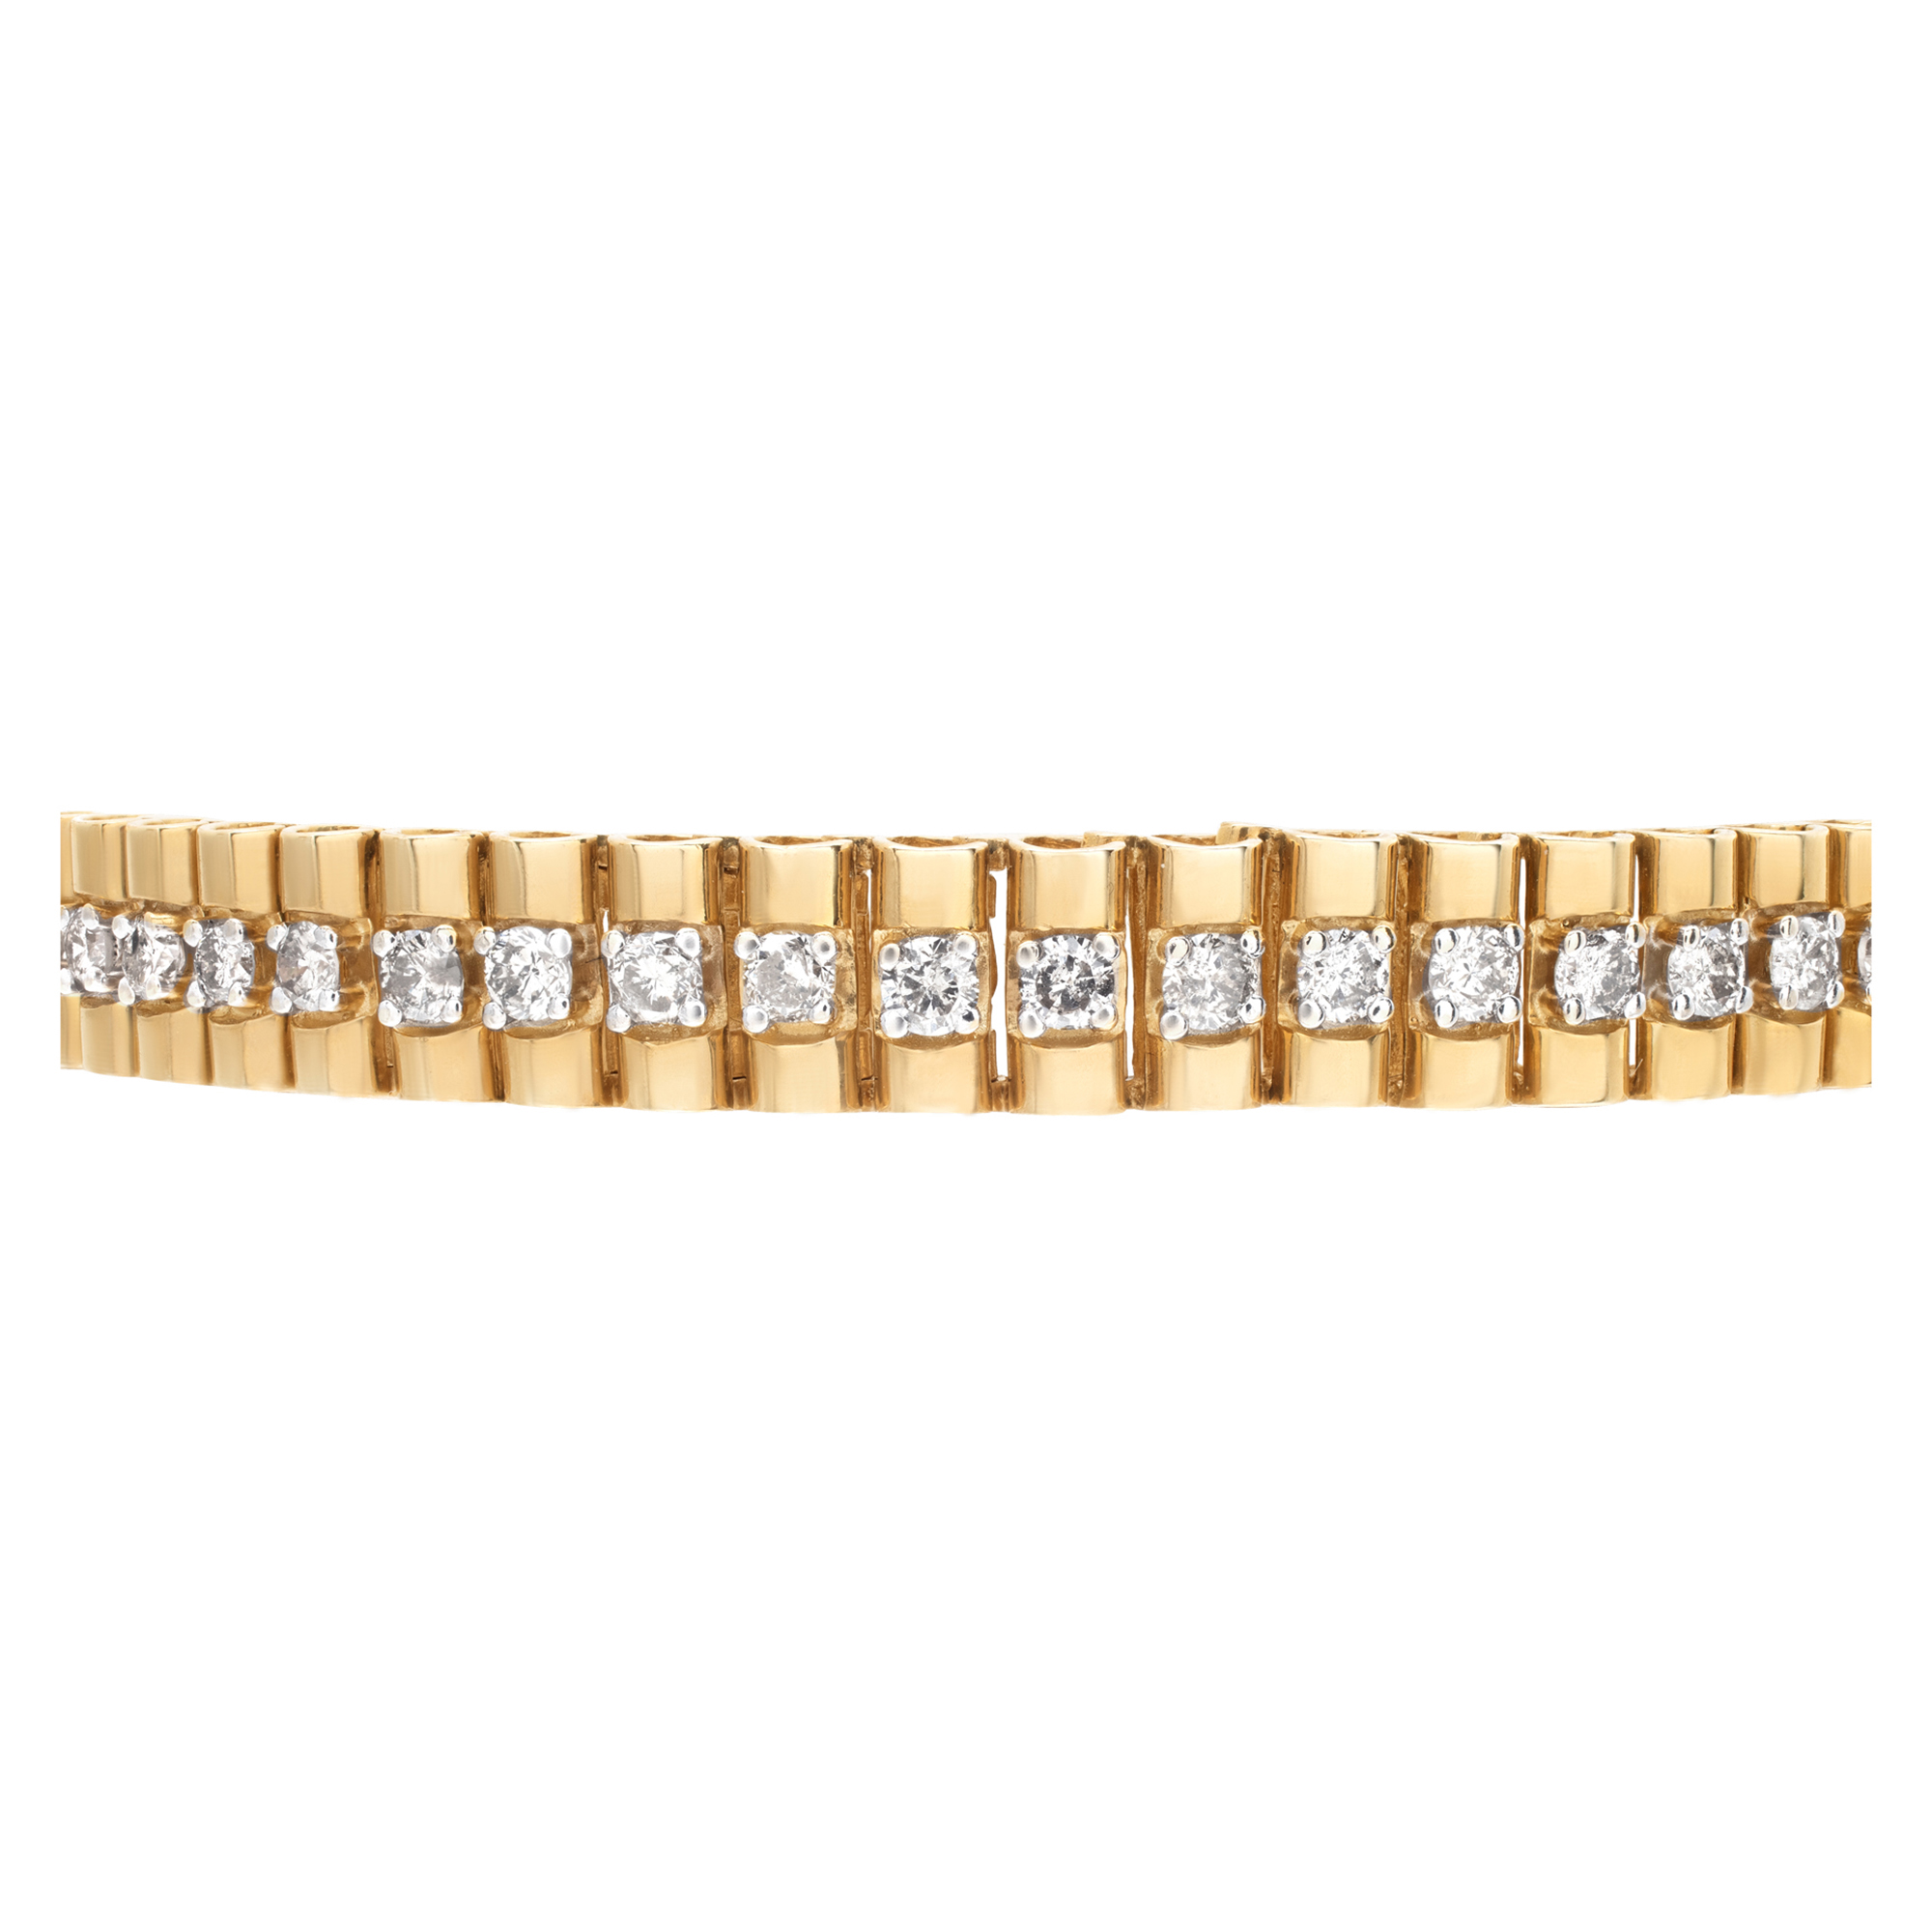 Stylish president style link bracelet with approximately 3 carats full cut round brilliant diamonds set in 14k yellow gold image 2